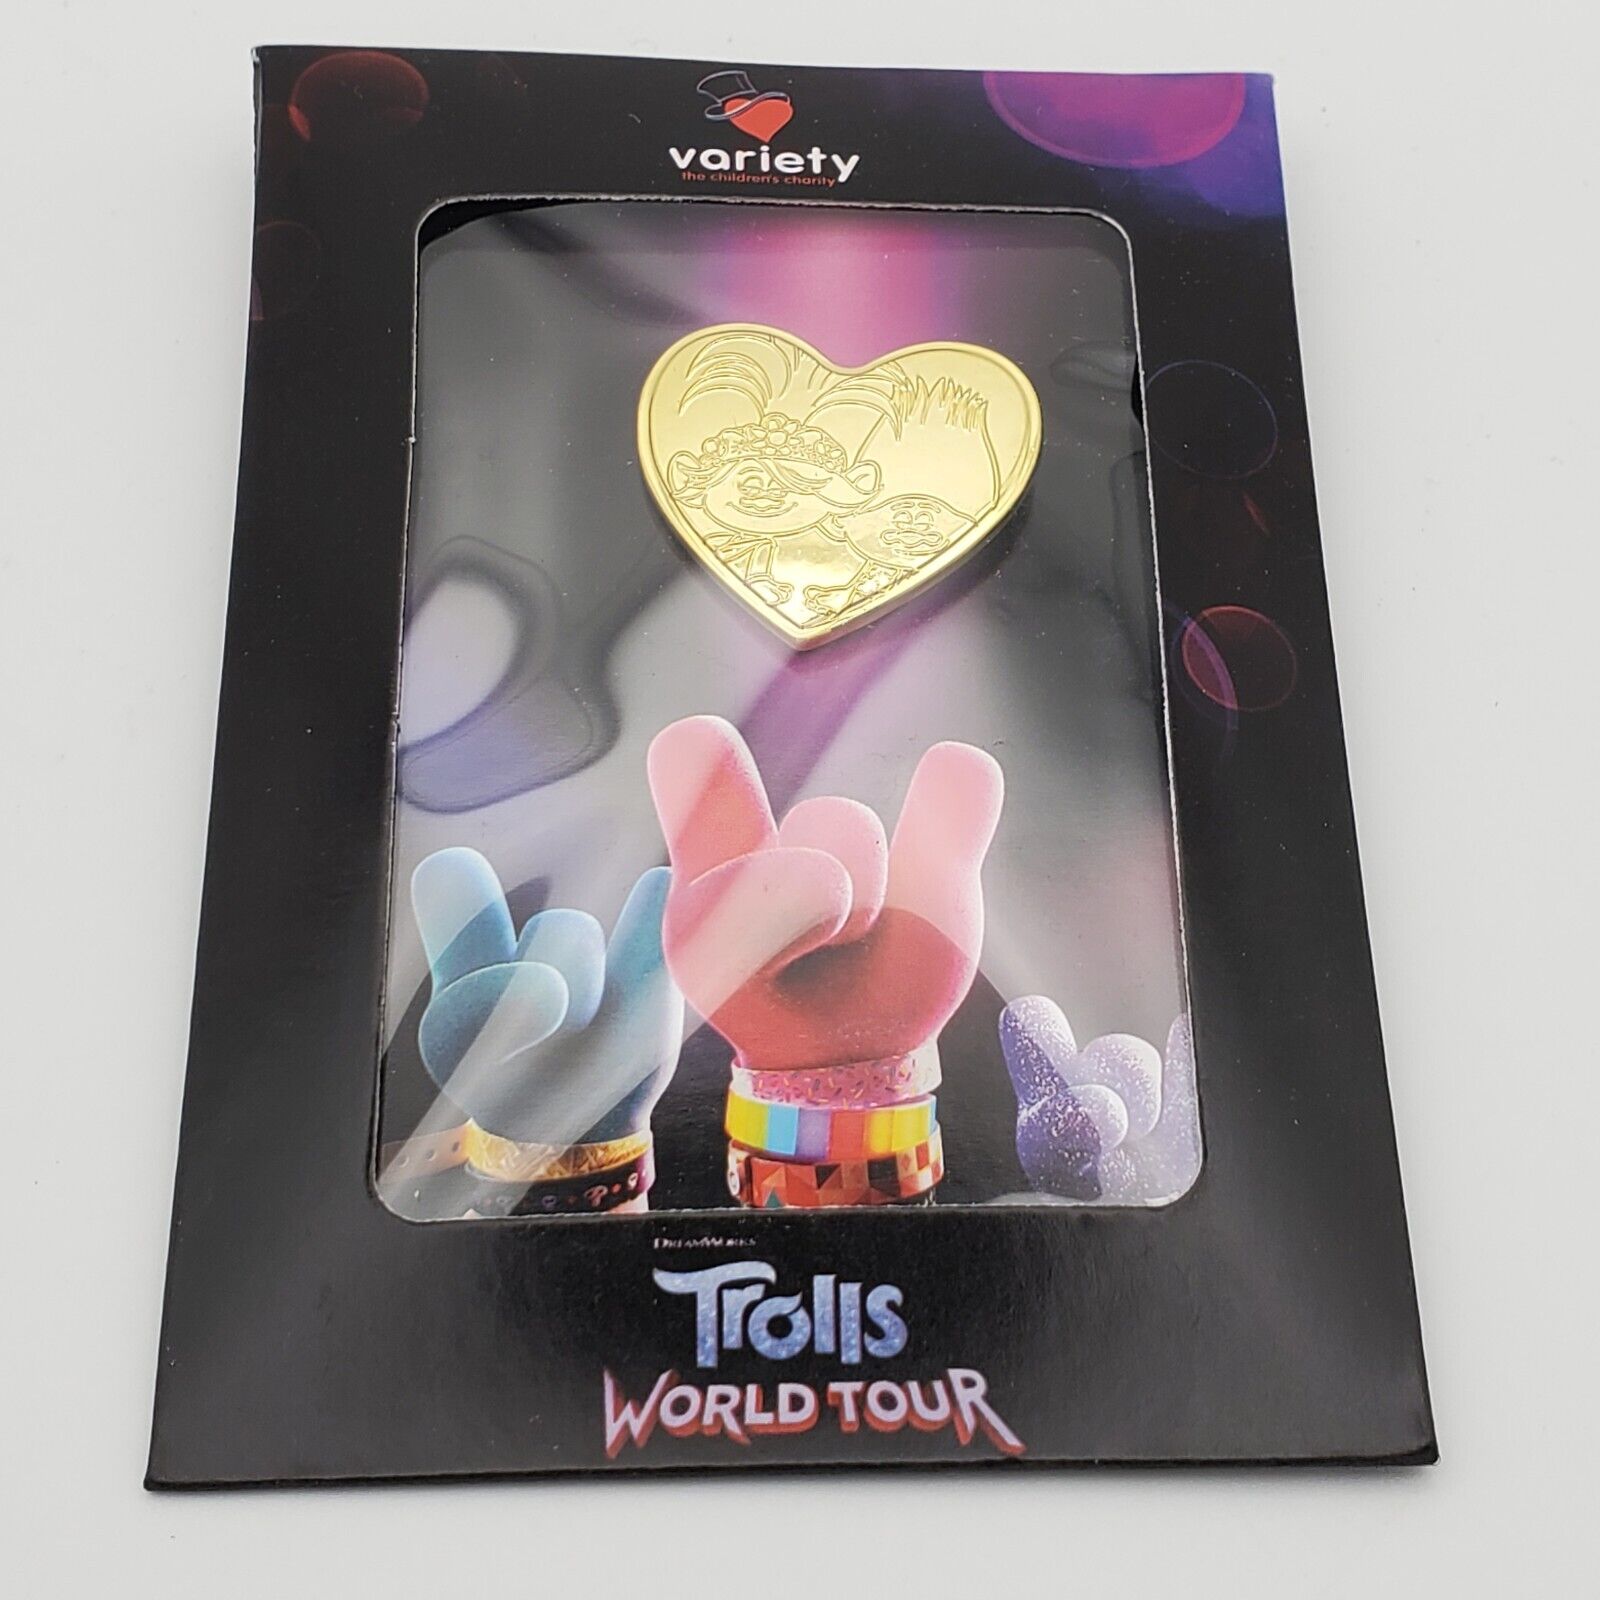 Trolls World Tour Variety Pin 2019 Heart Shaped Gold Tone Lapel Dreamworks New